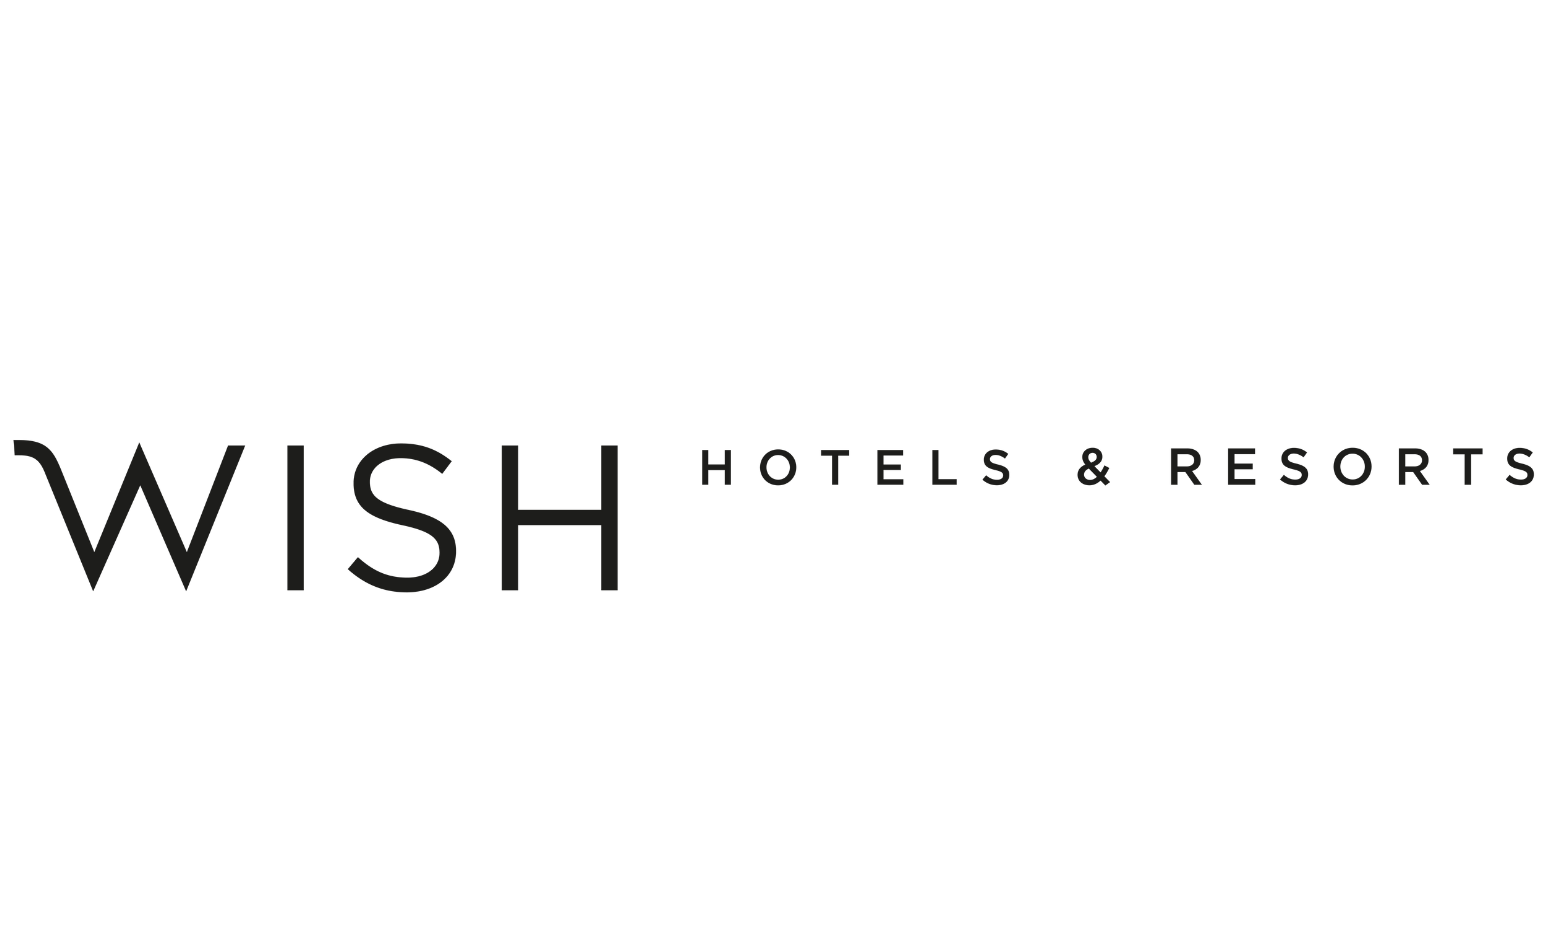 Wish Hotels